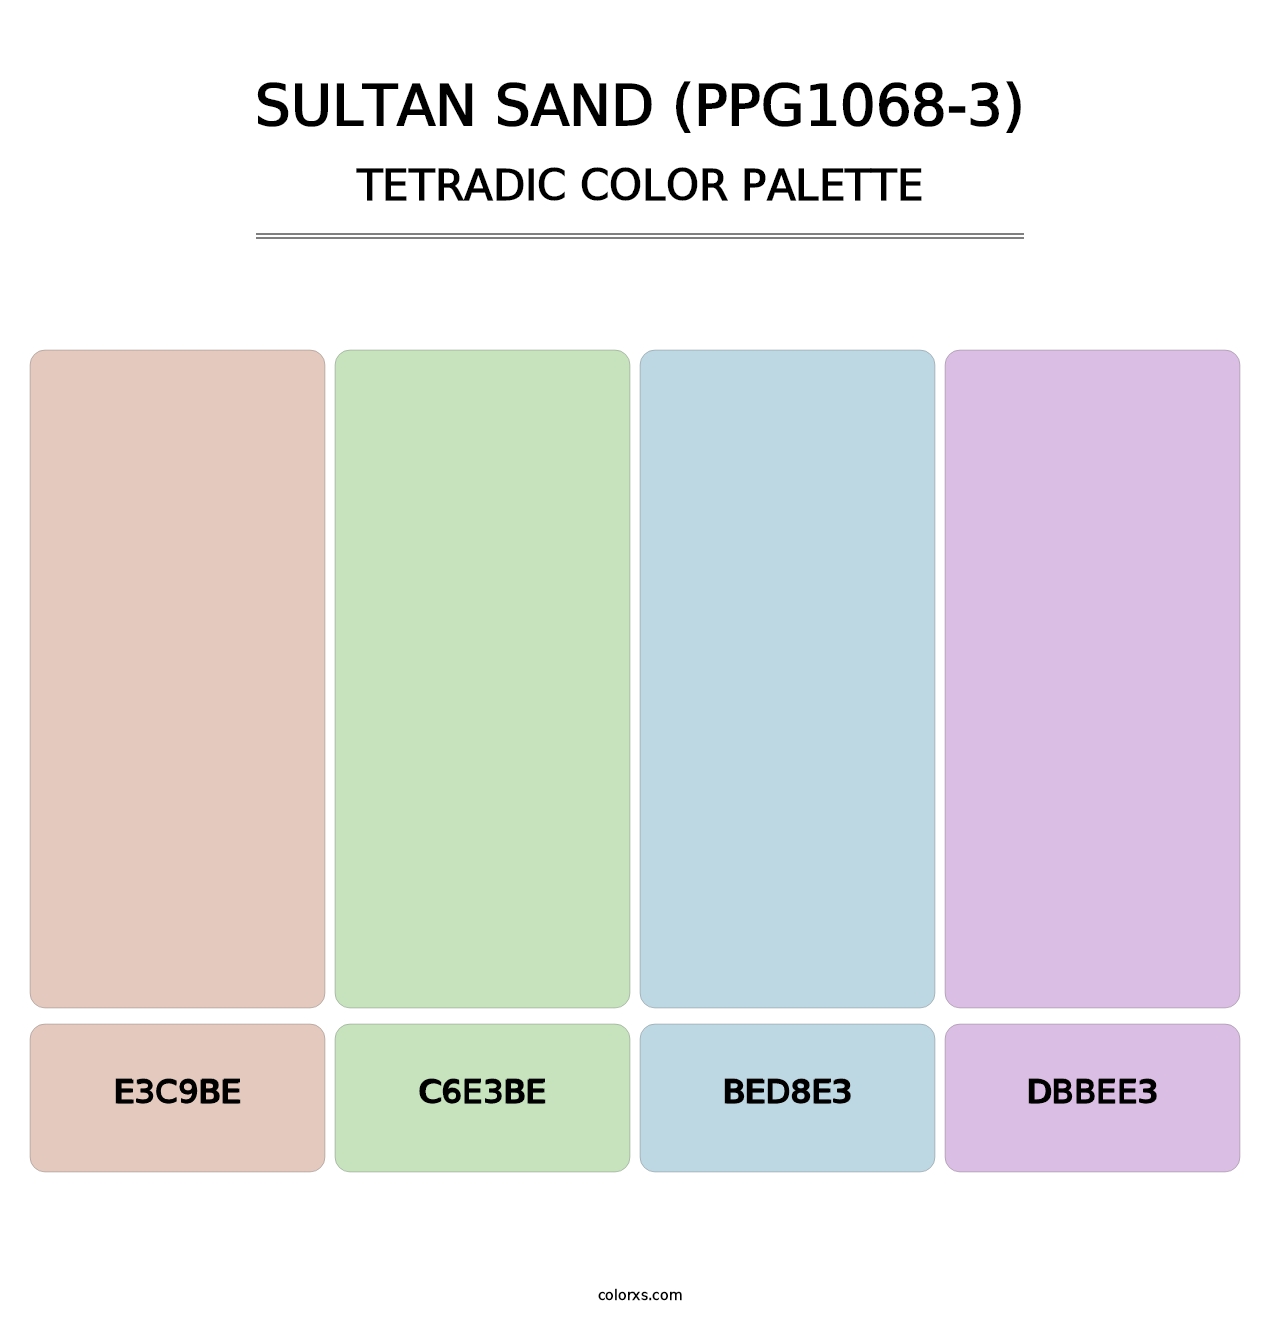 Sultan Sand (PPG1068-3) - Tetradic Color Palette